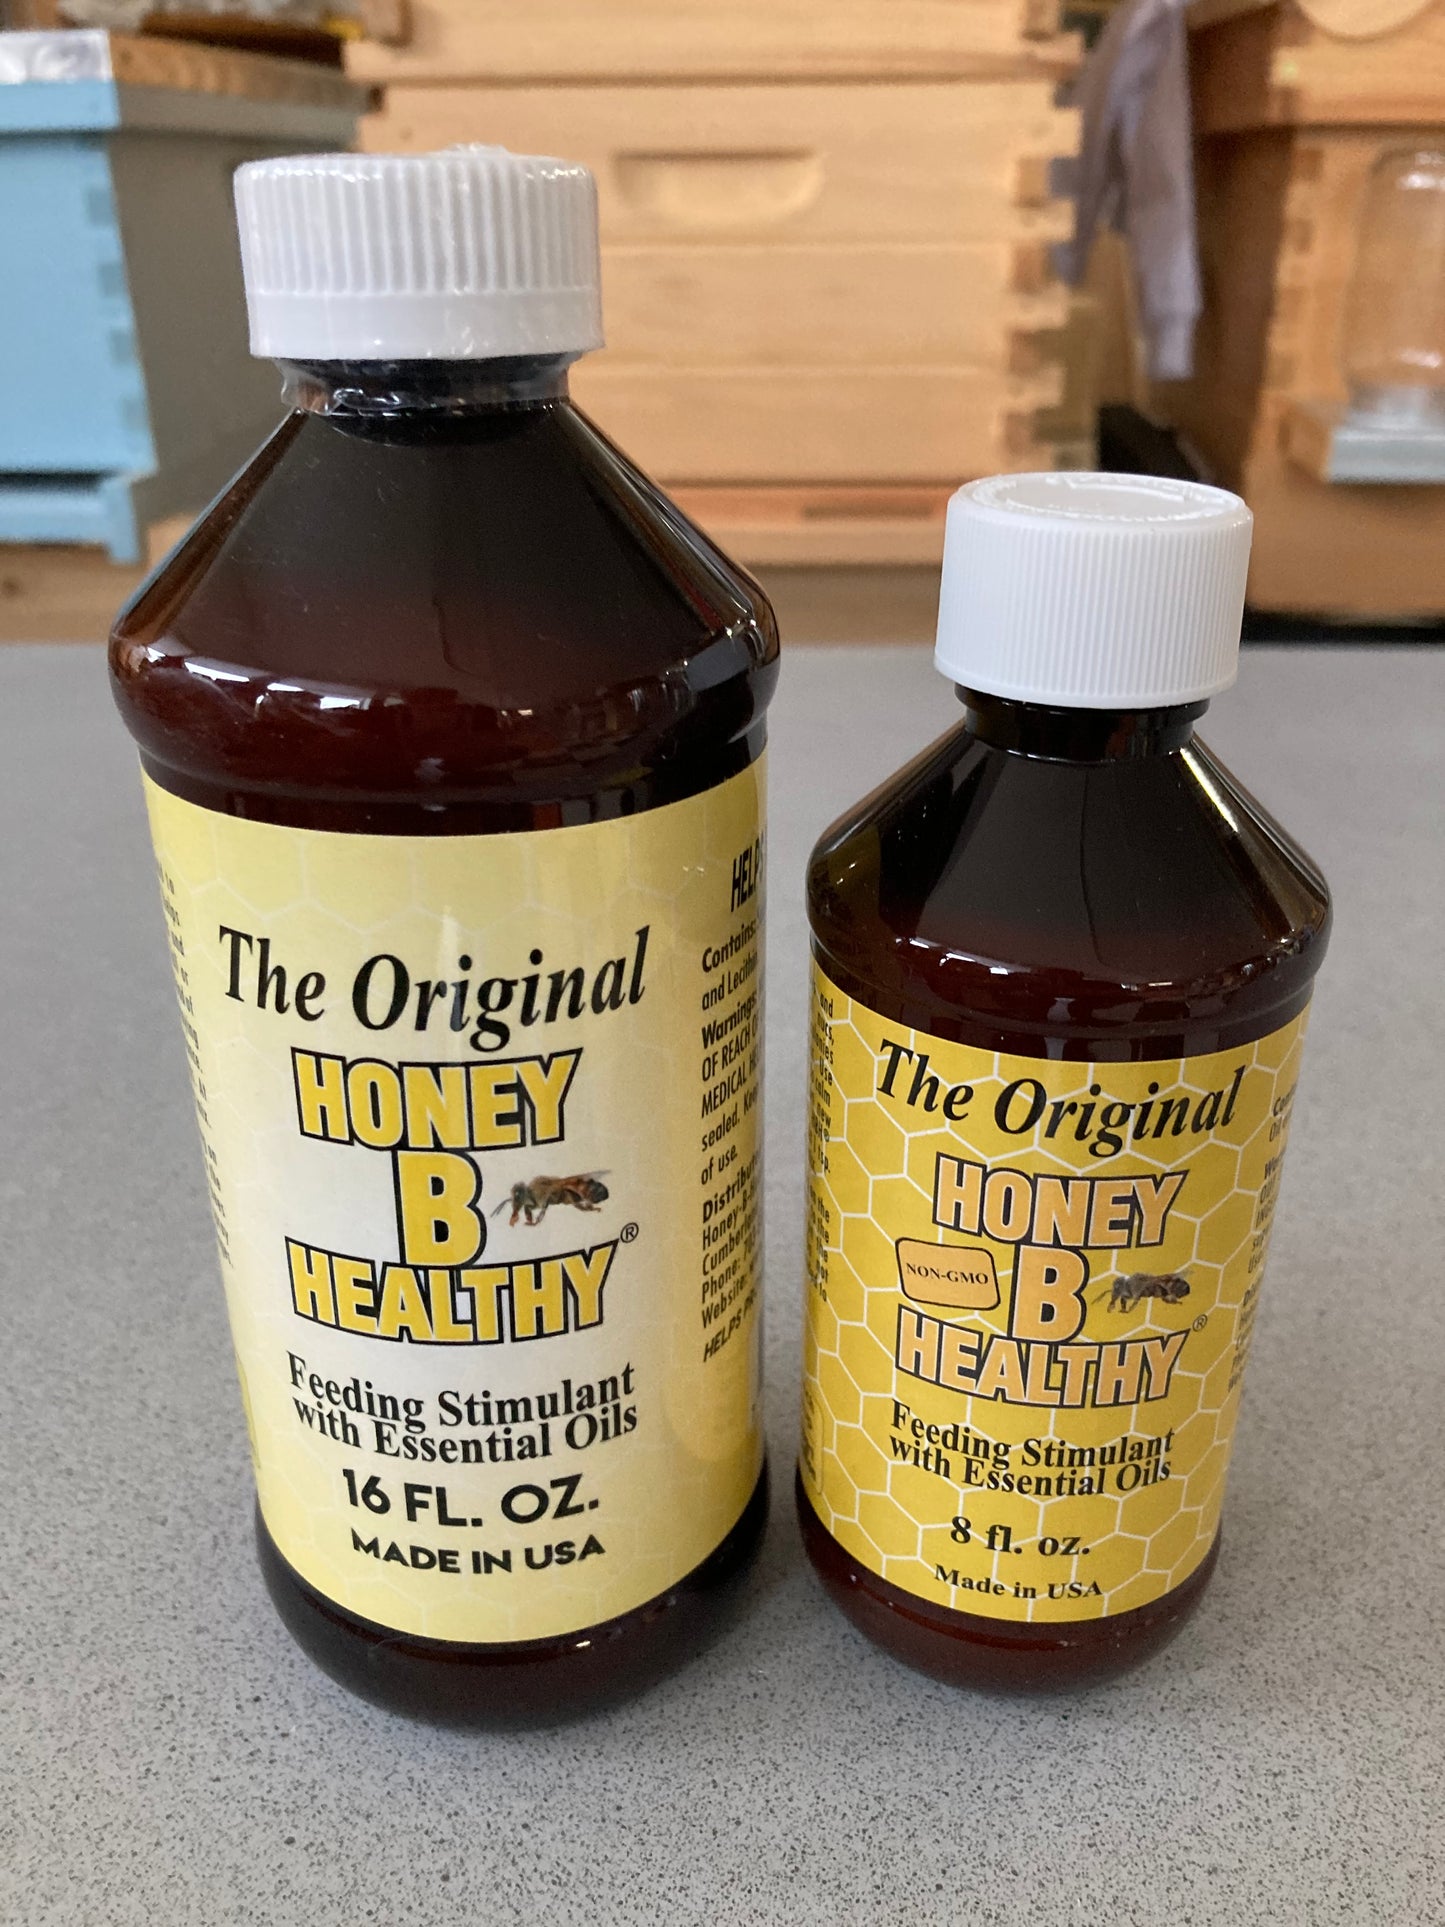 Honey B healthy